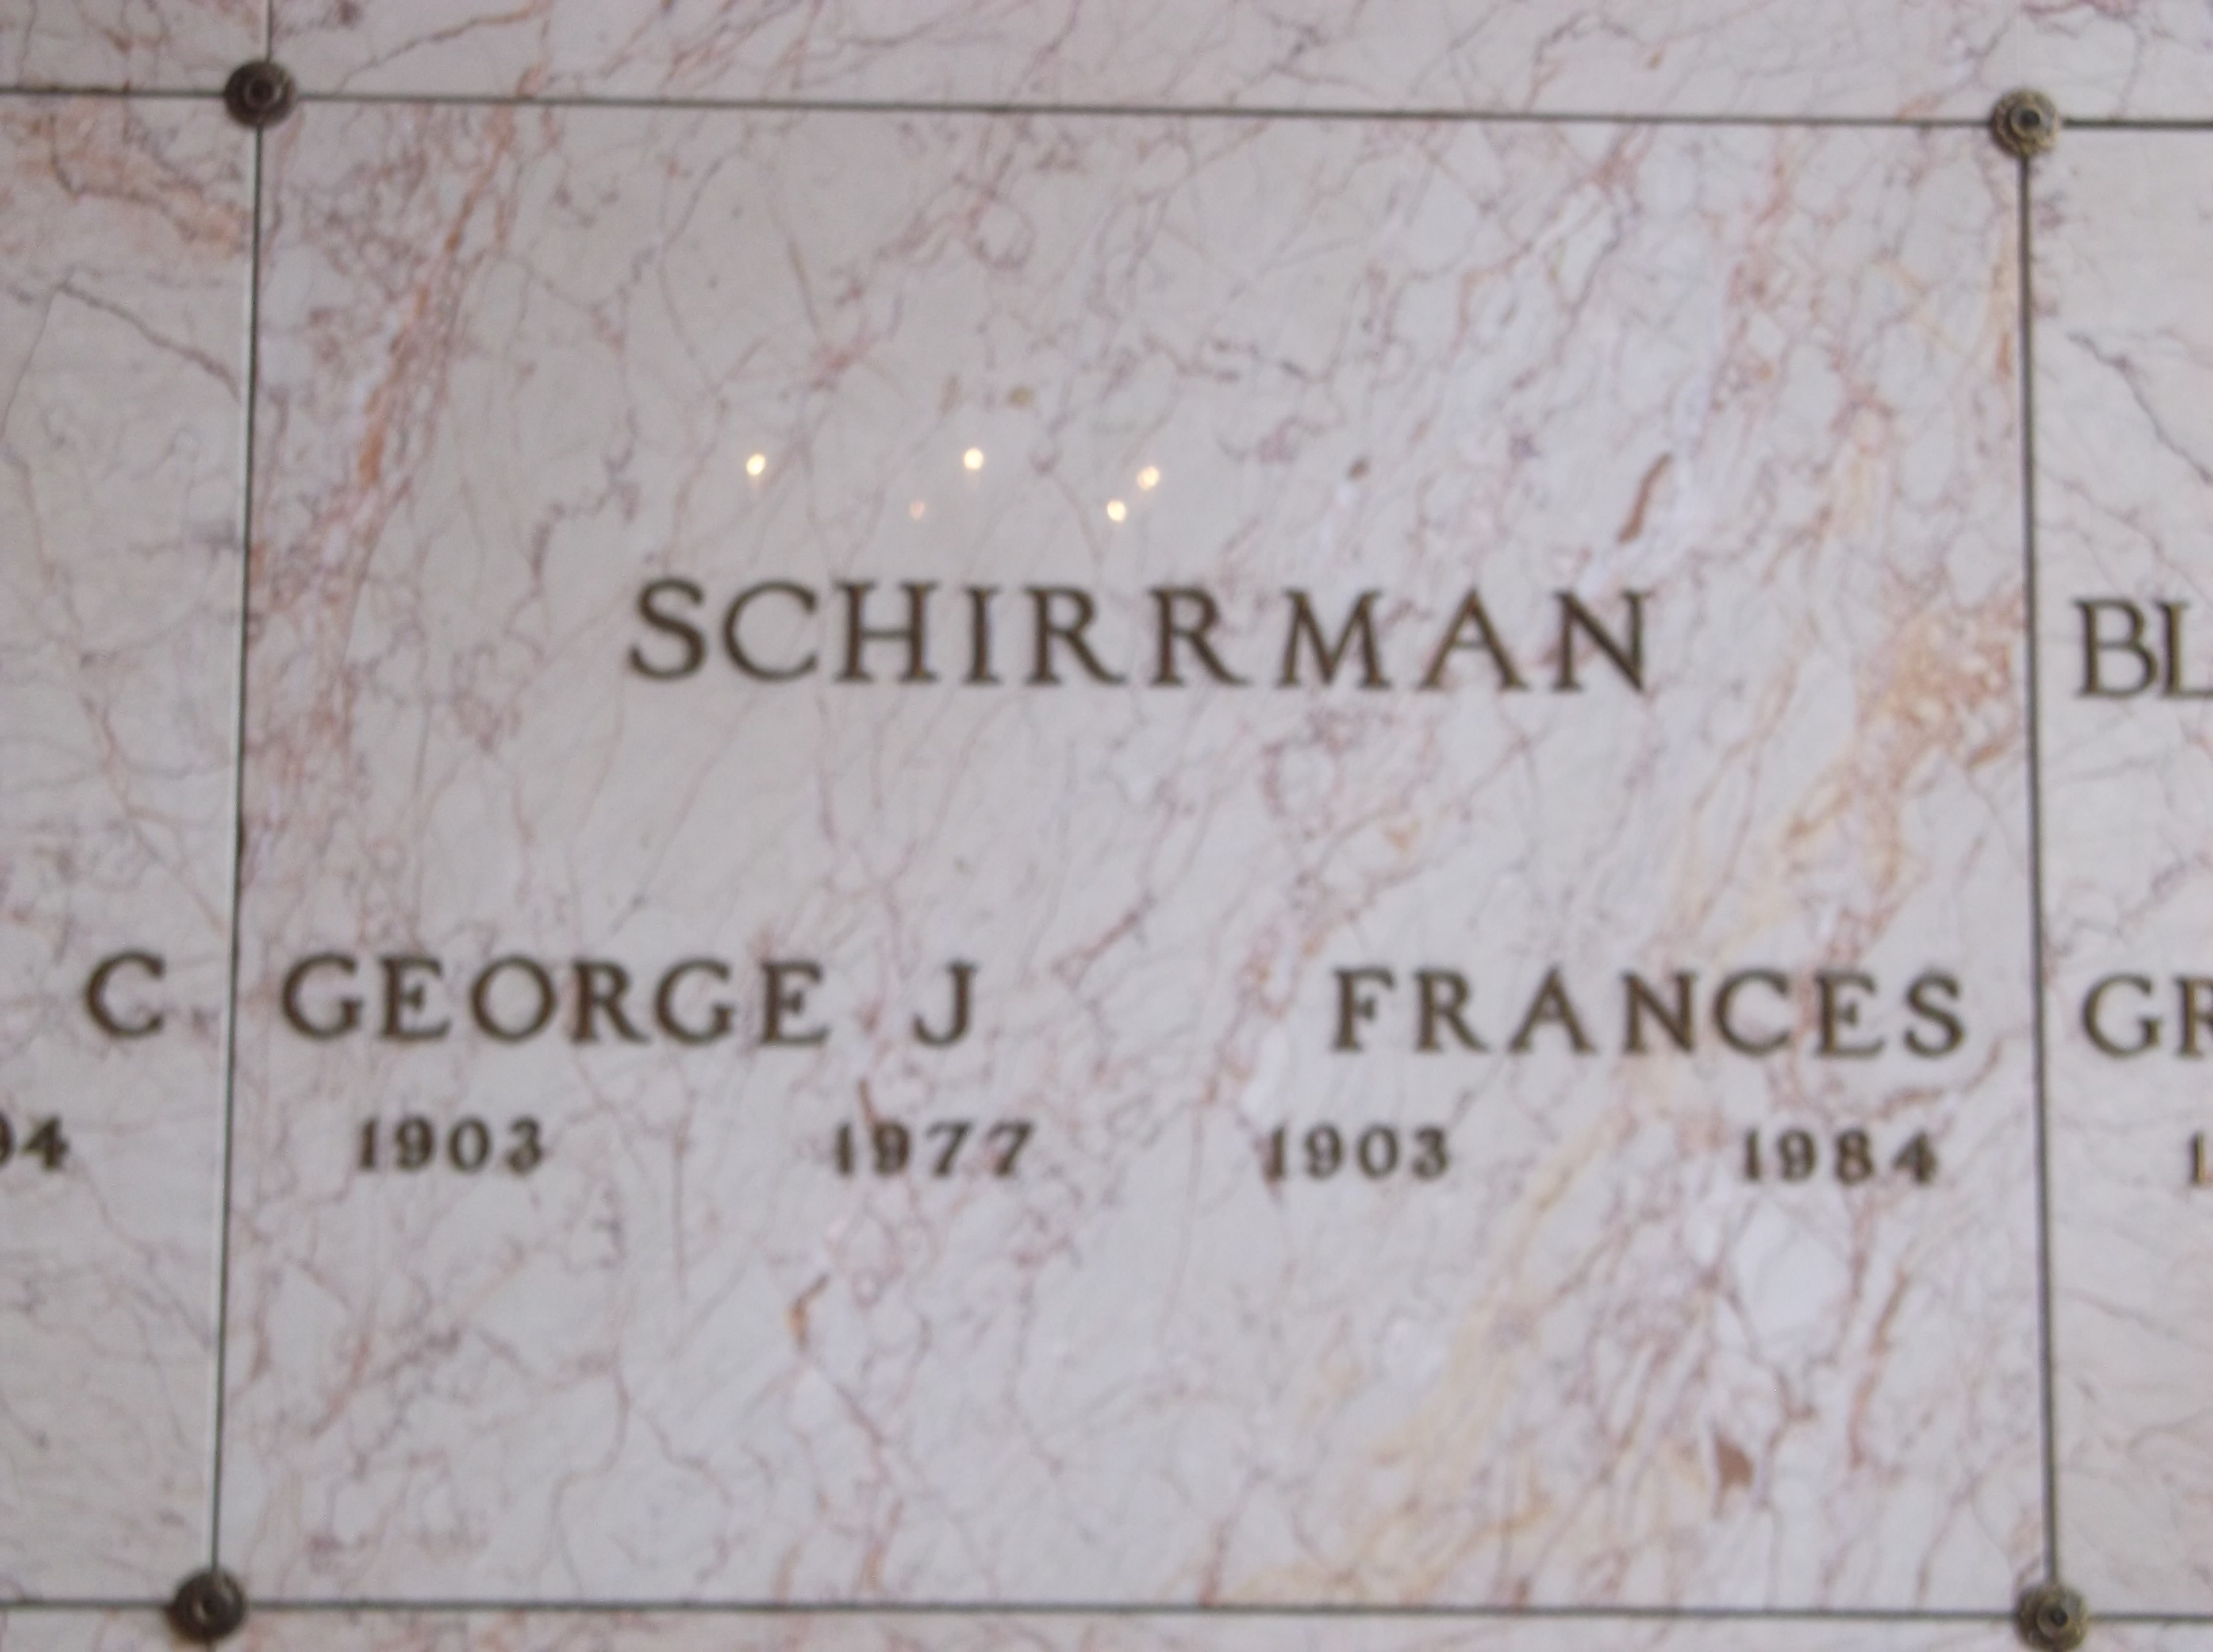 George J Schirrman